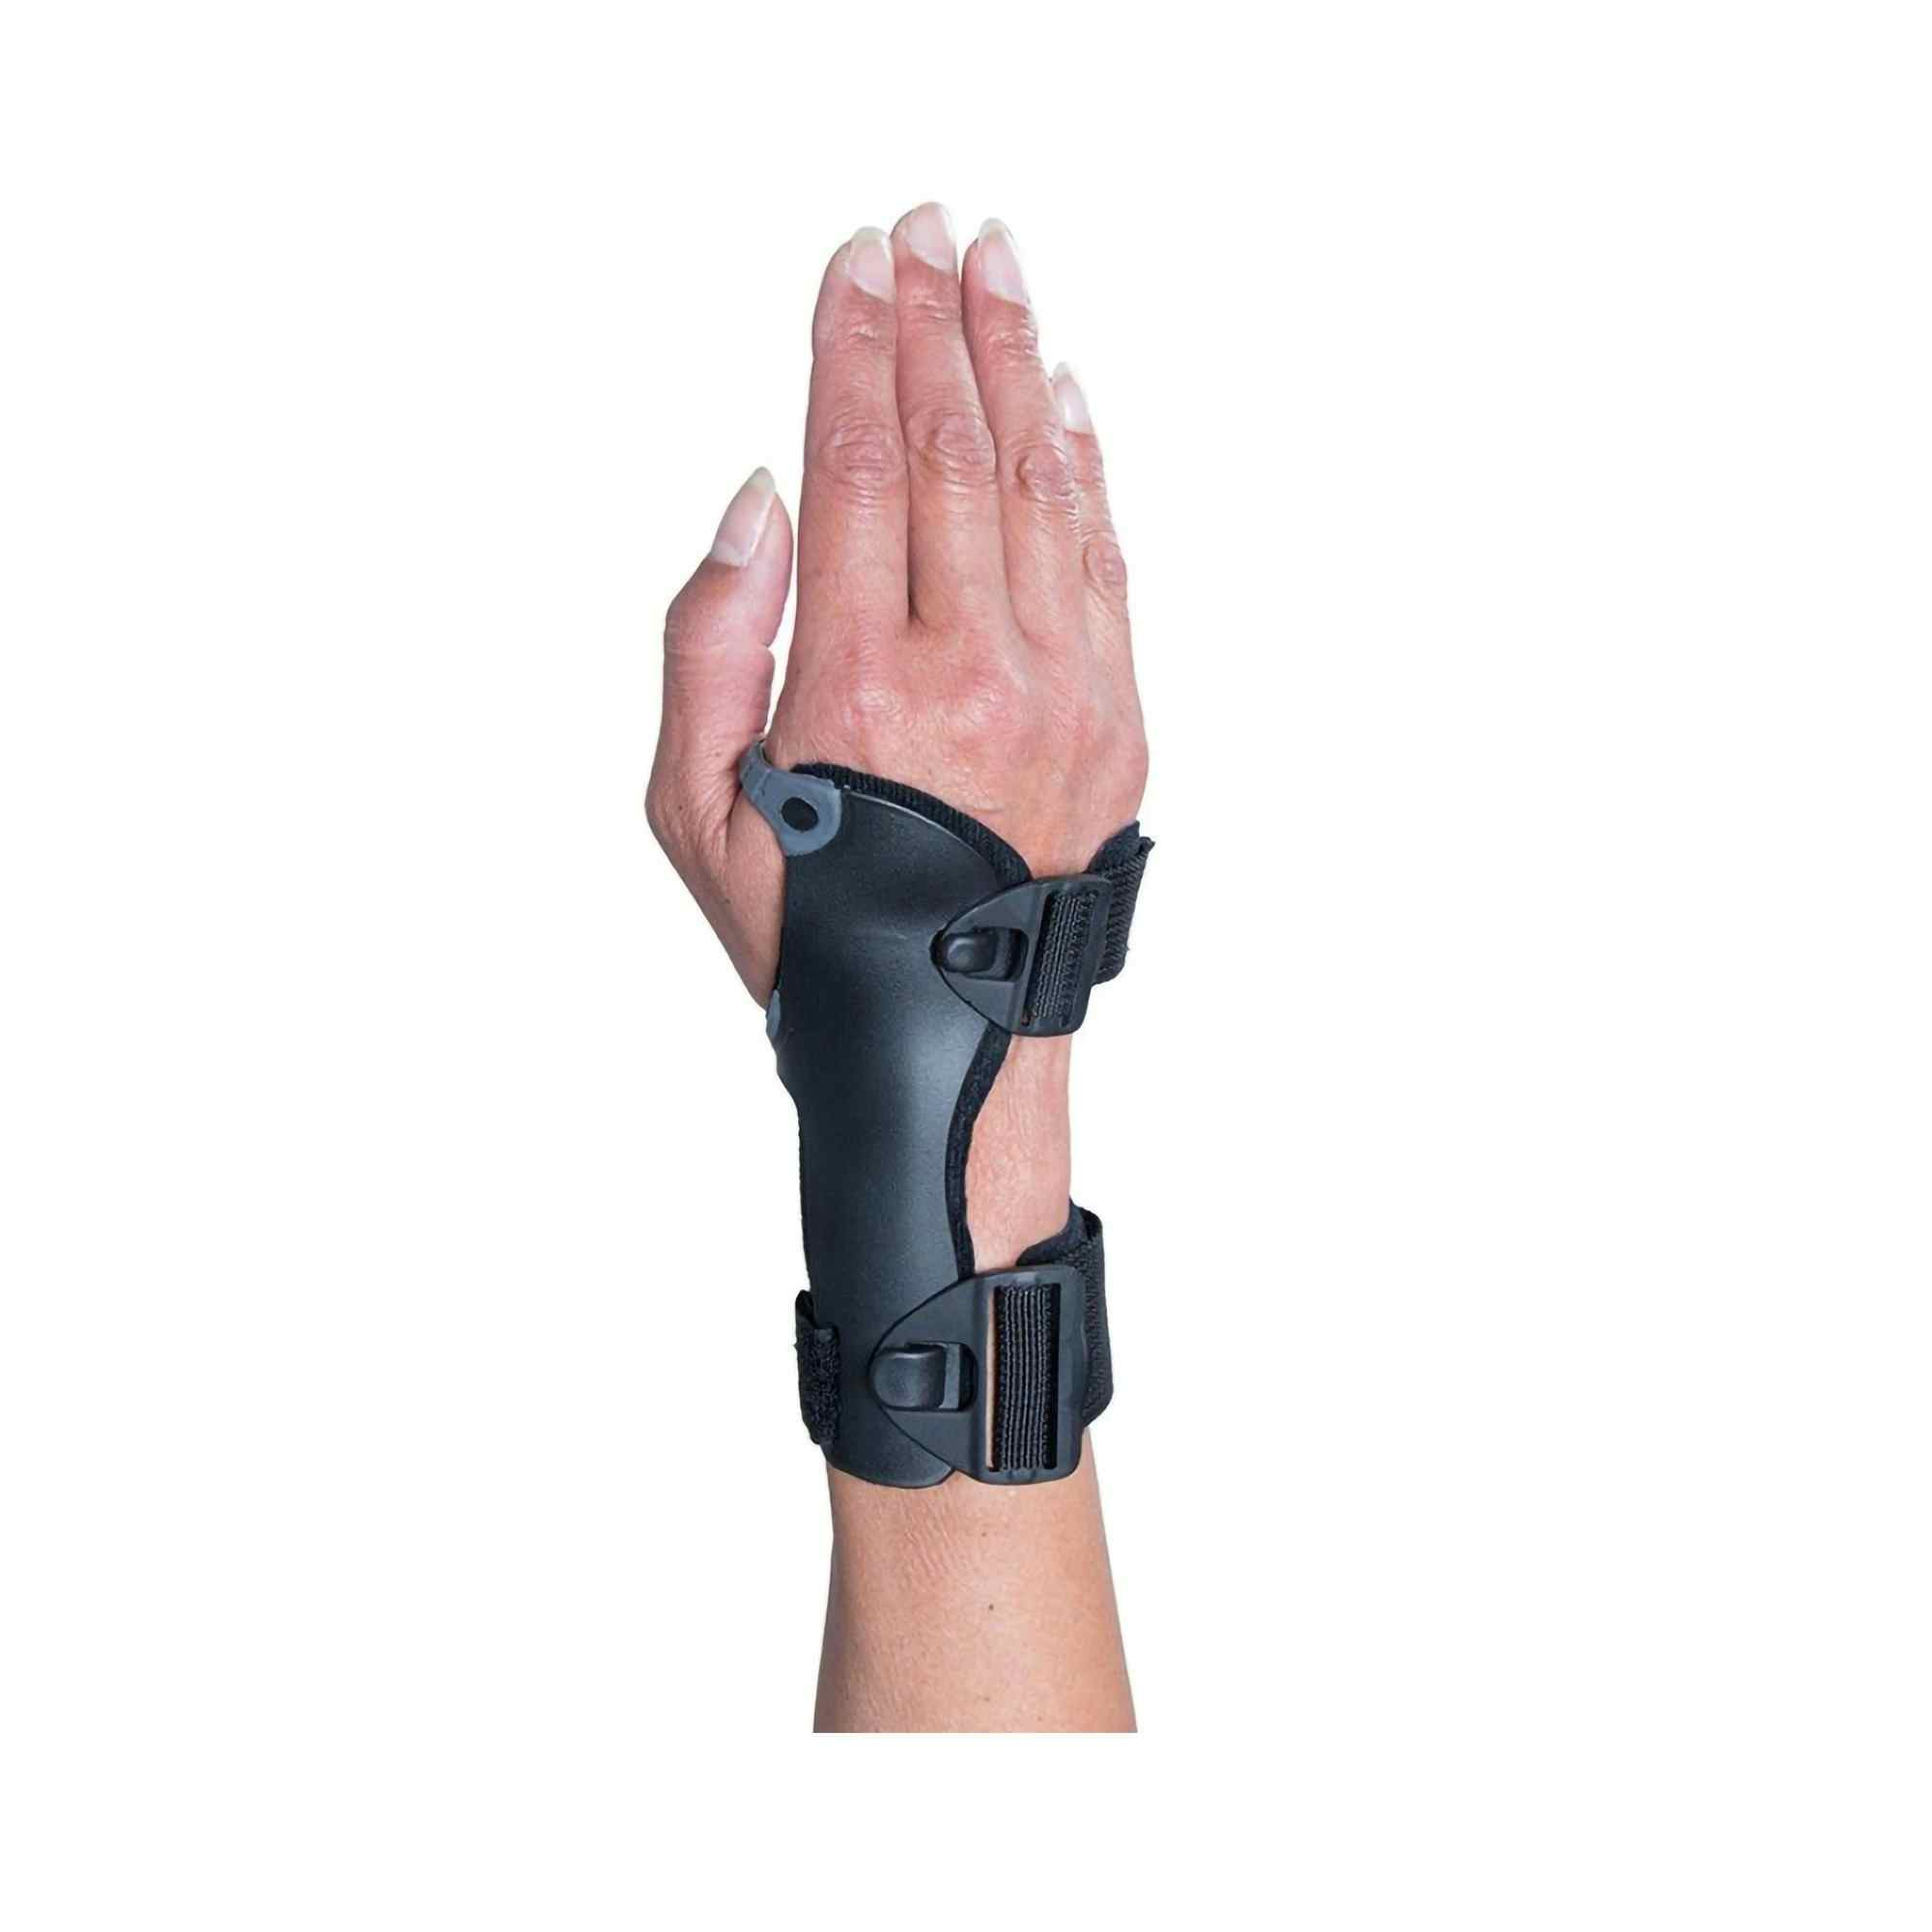 Ossur Exoform Left Carpal Tunnel Wrist Support, 517085, Medium (Wrist 6.5-7.75"/Palm 8-9.25") - 1 Each